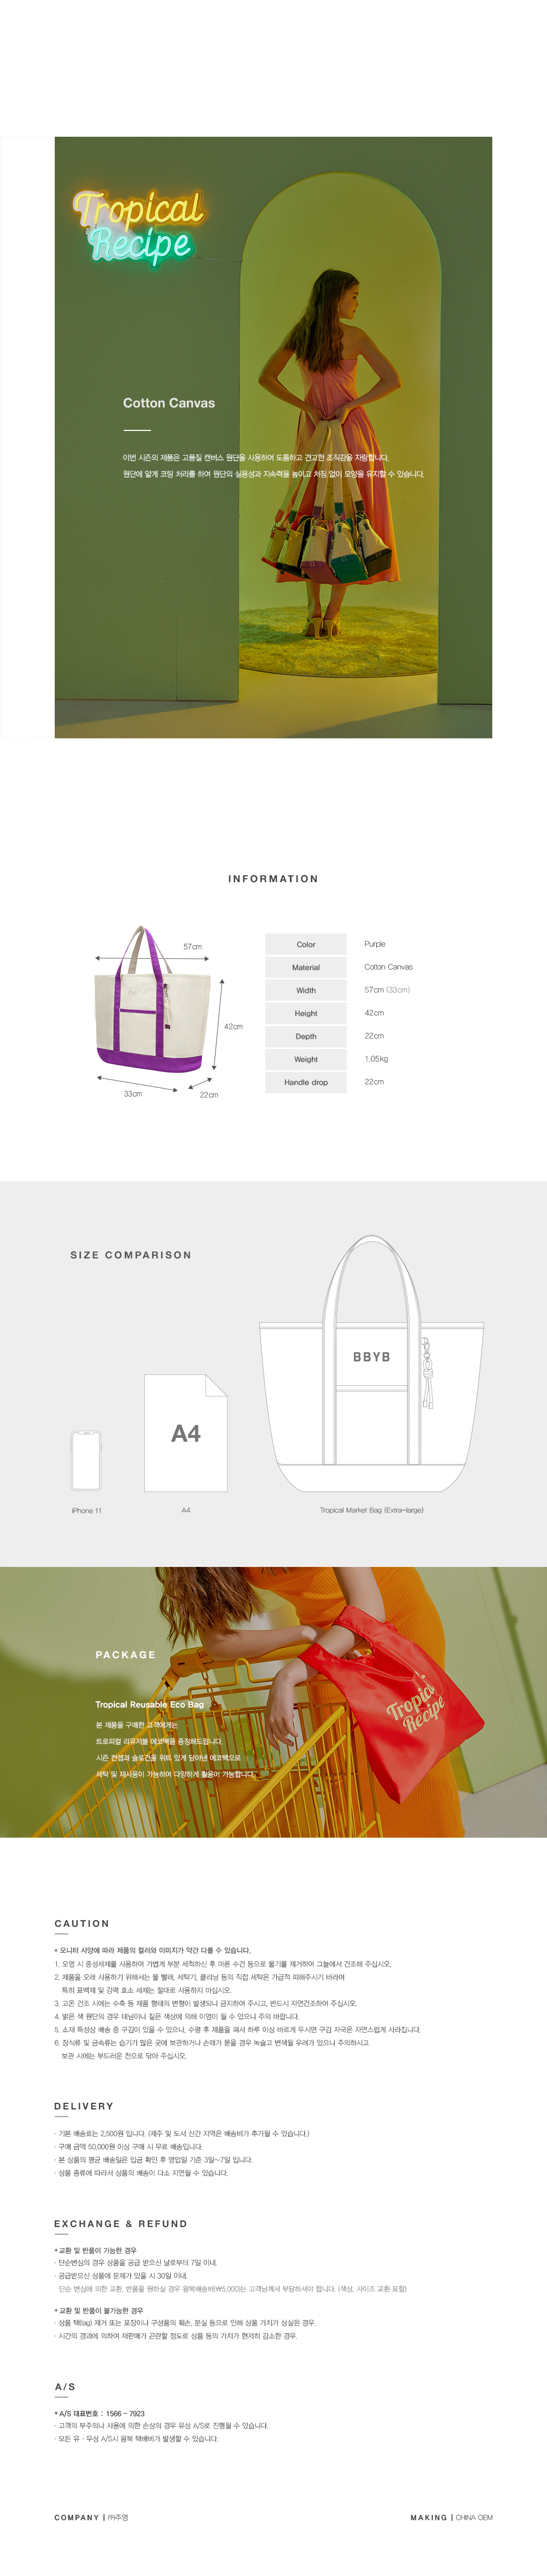 BBYB Tropical Market Bag (Extra-large) Purple